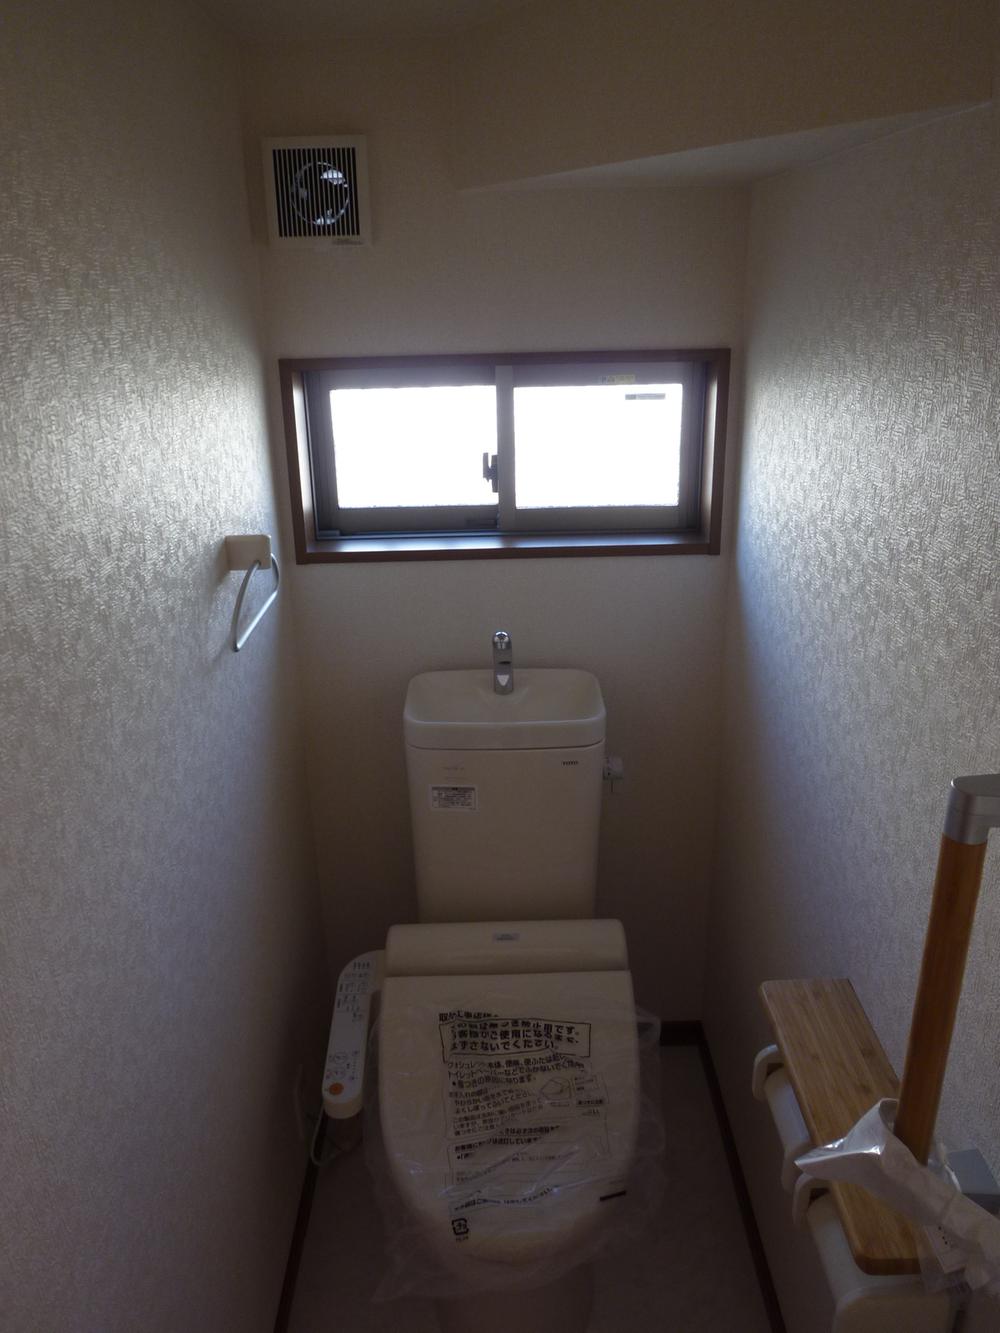 Toilet. Interior (December 2, 2013) Shooting